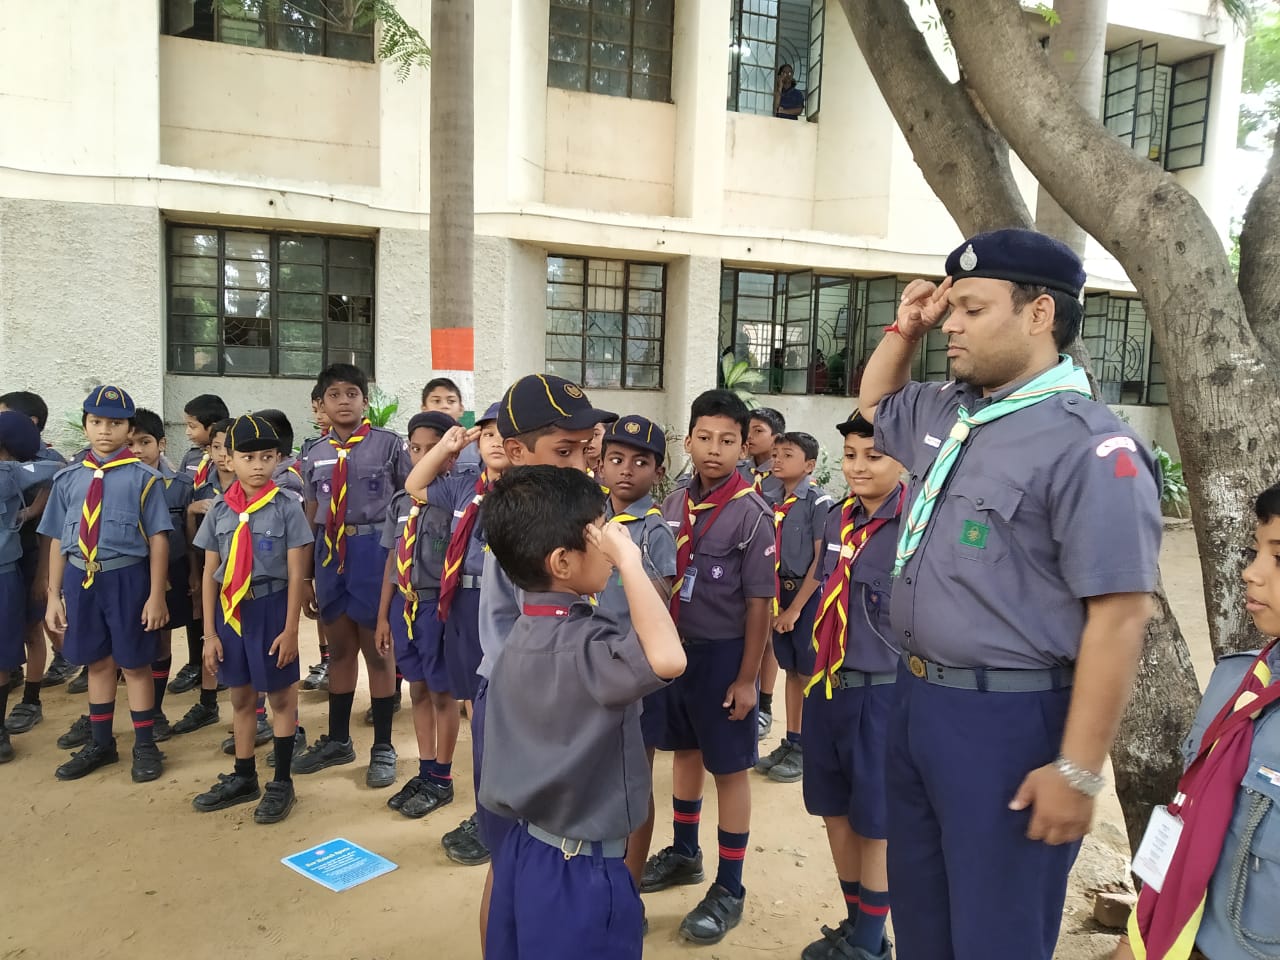 KVS Bharat Scout Guide Dress - YouTube